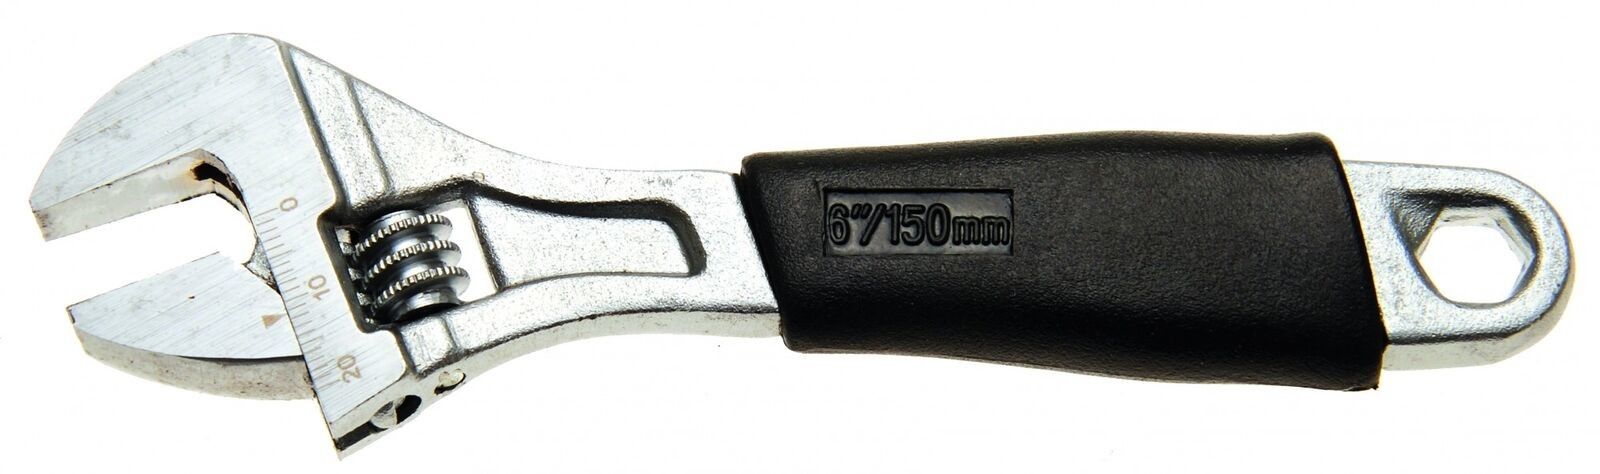 Chiave a rullino apertura 0-19 mm lunghezza mm 150 impugnatura gomma  6" BGS 1440